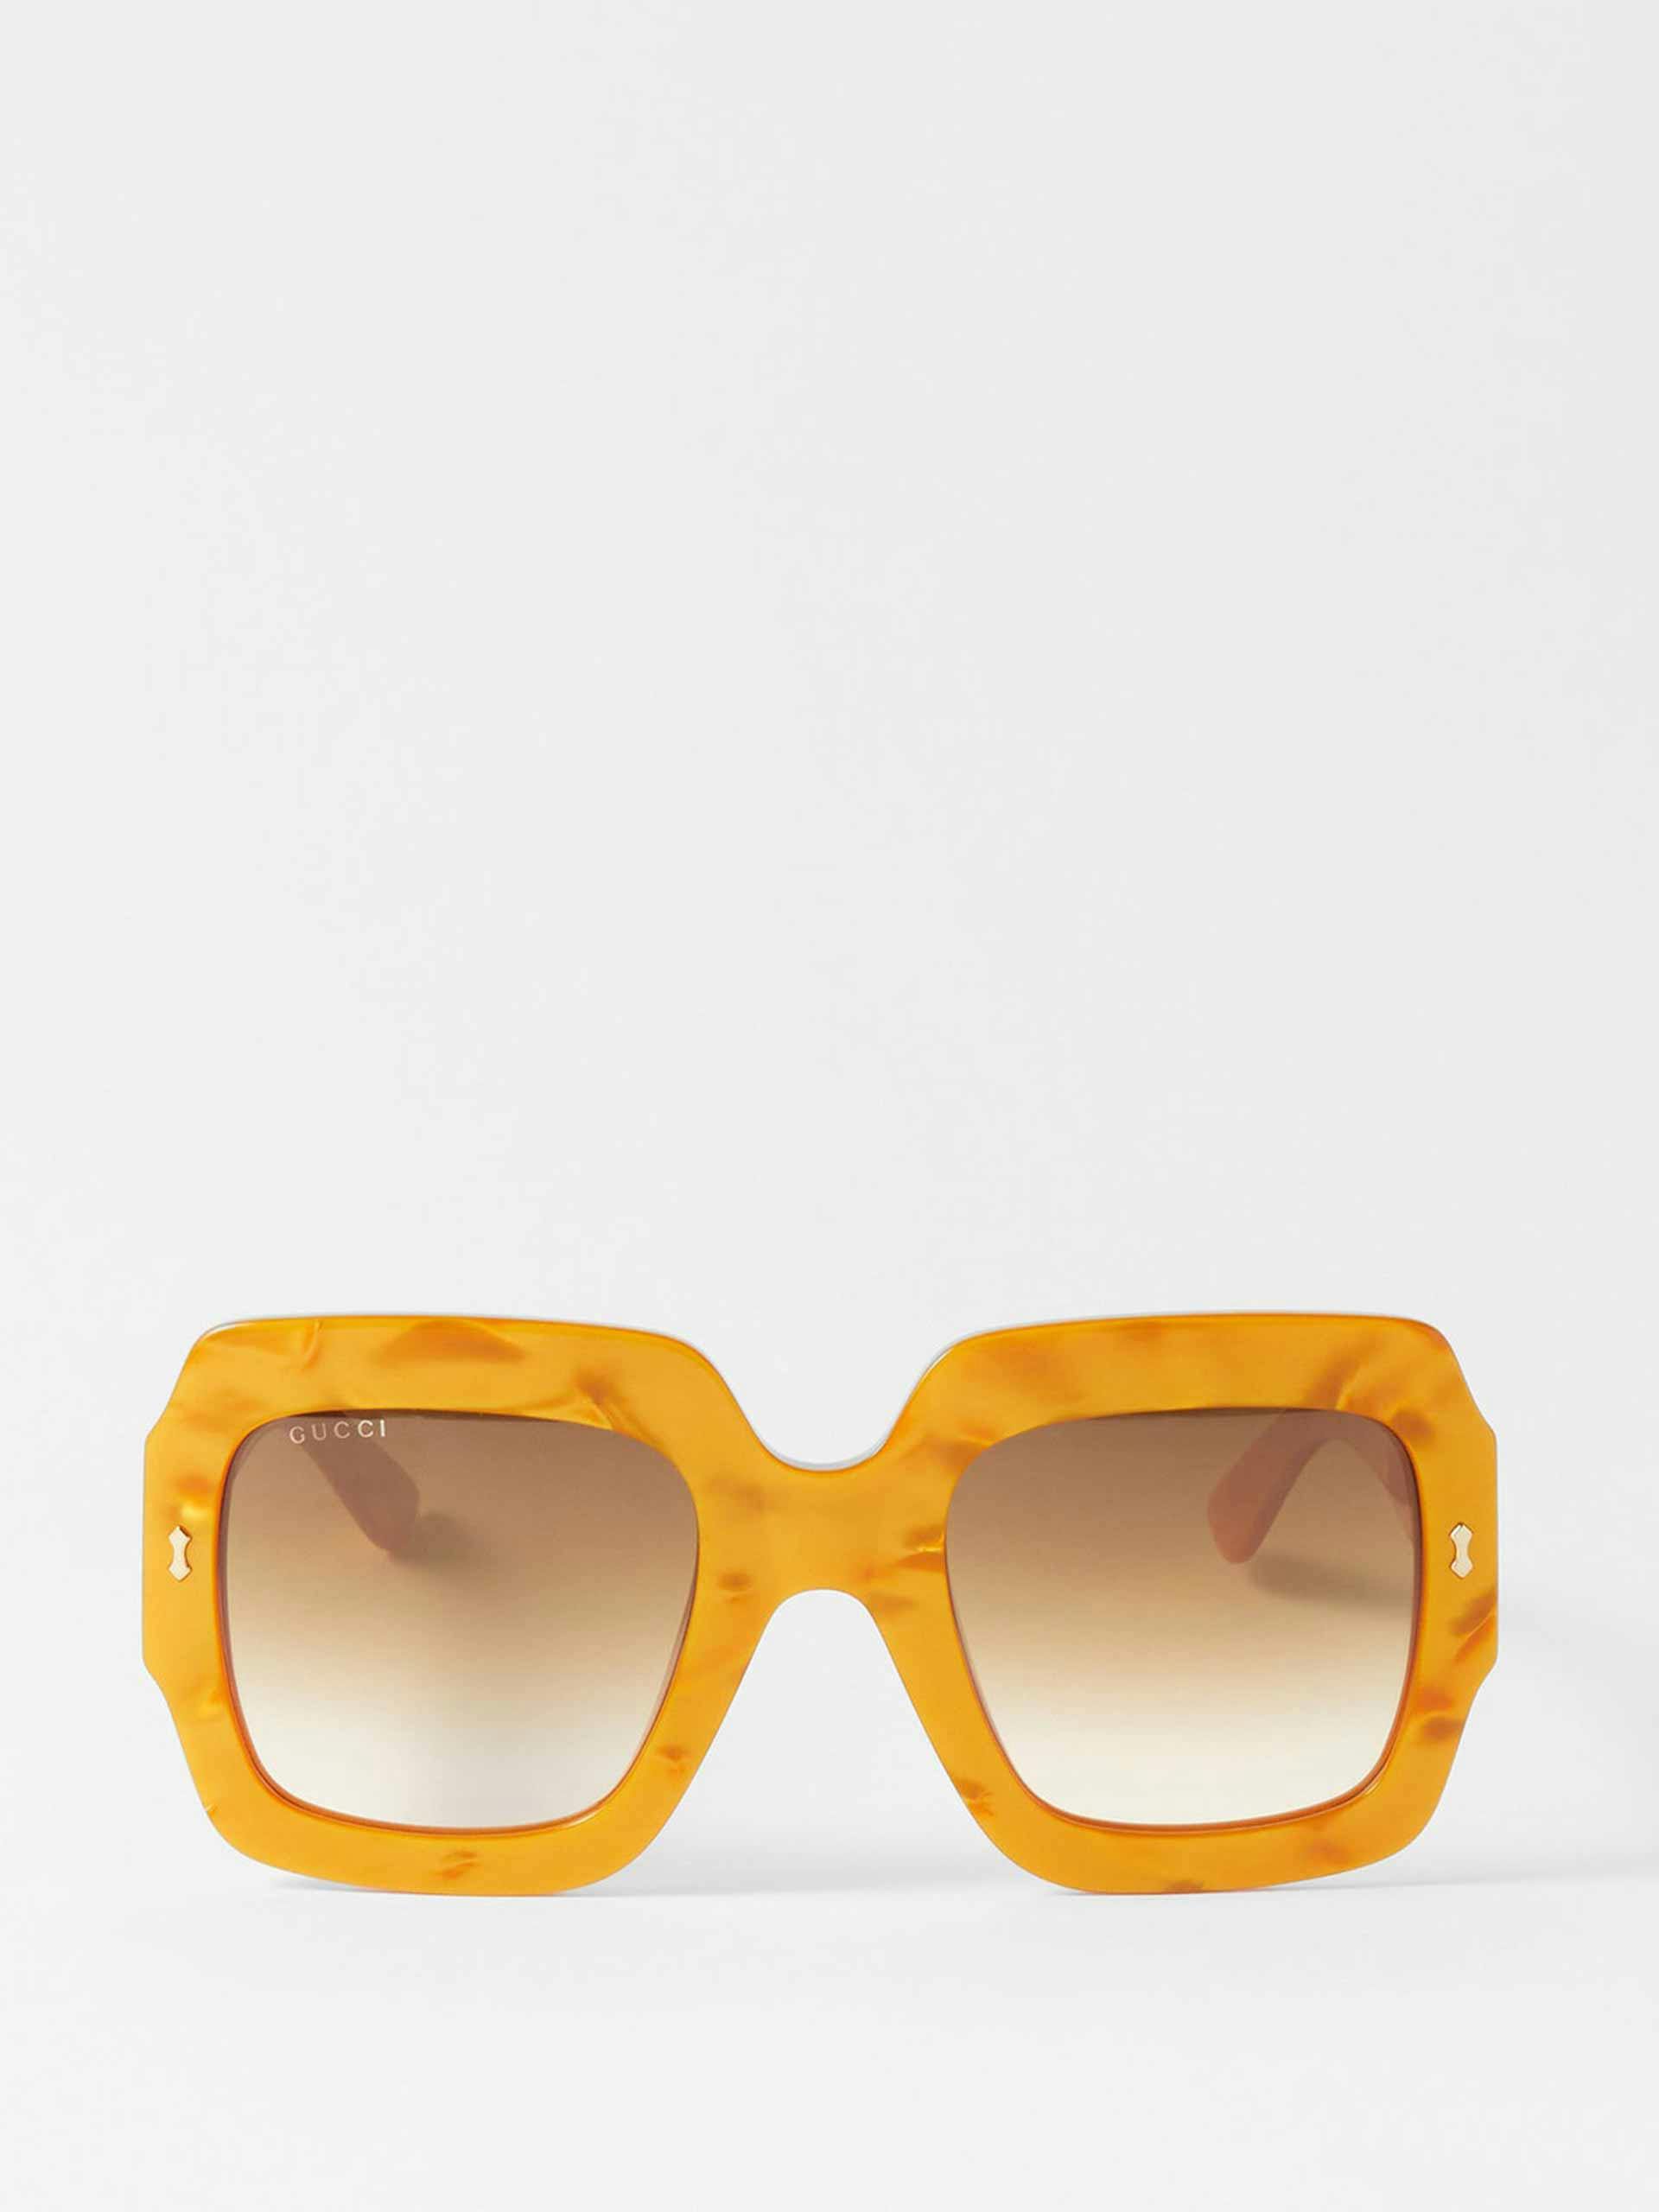 Oversized orange square sunglasses